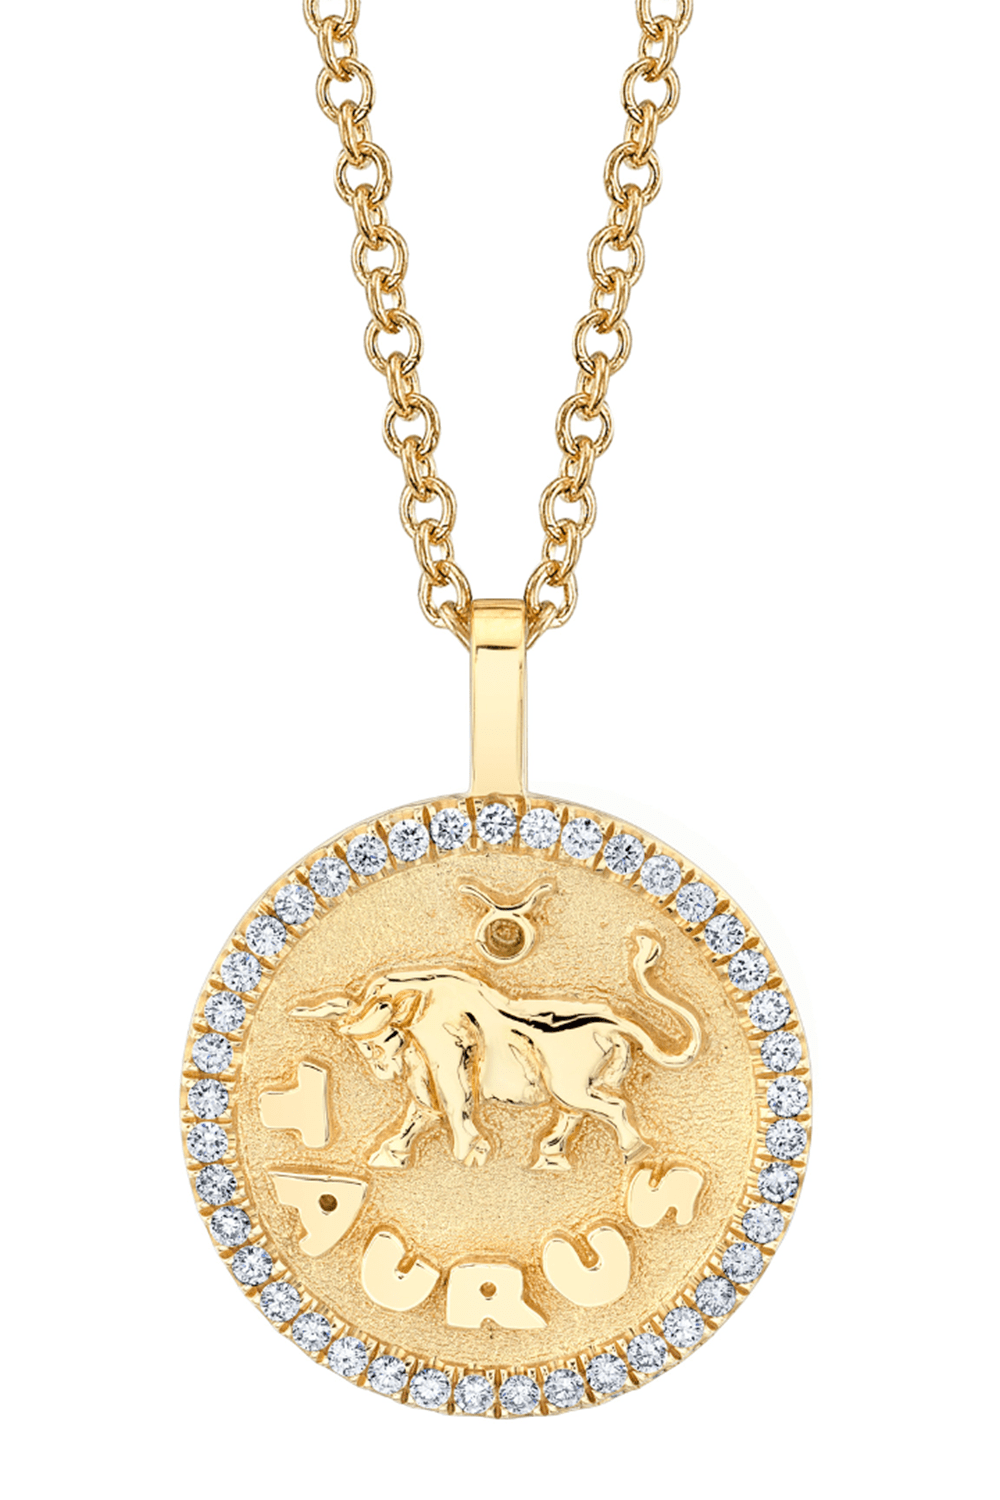 Anita Ko Jewelry